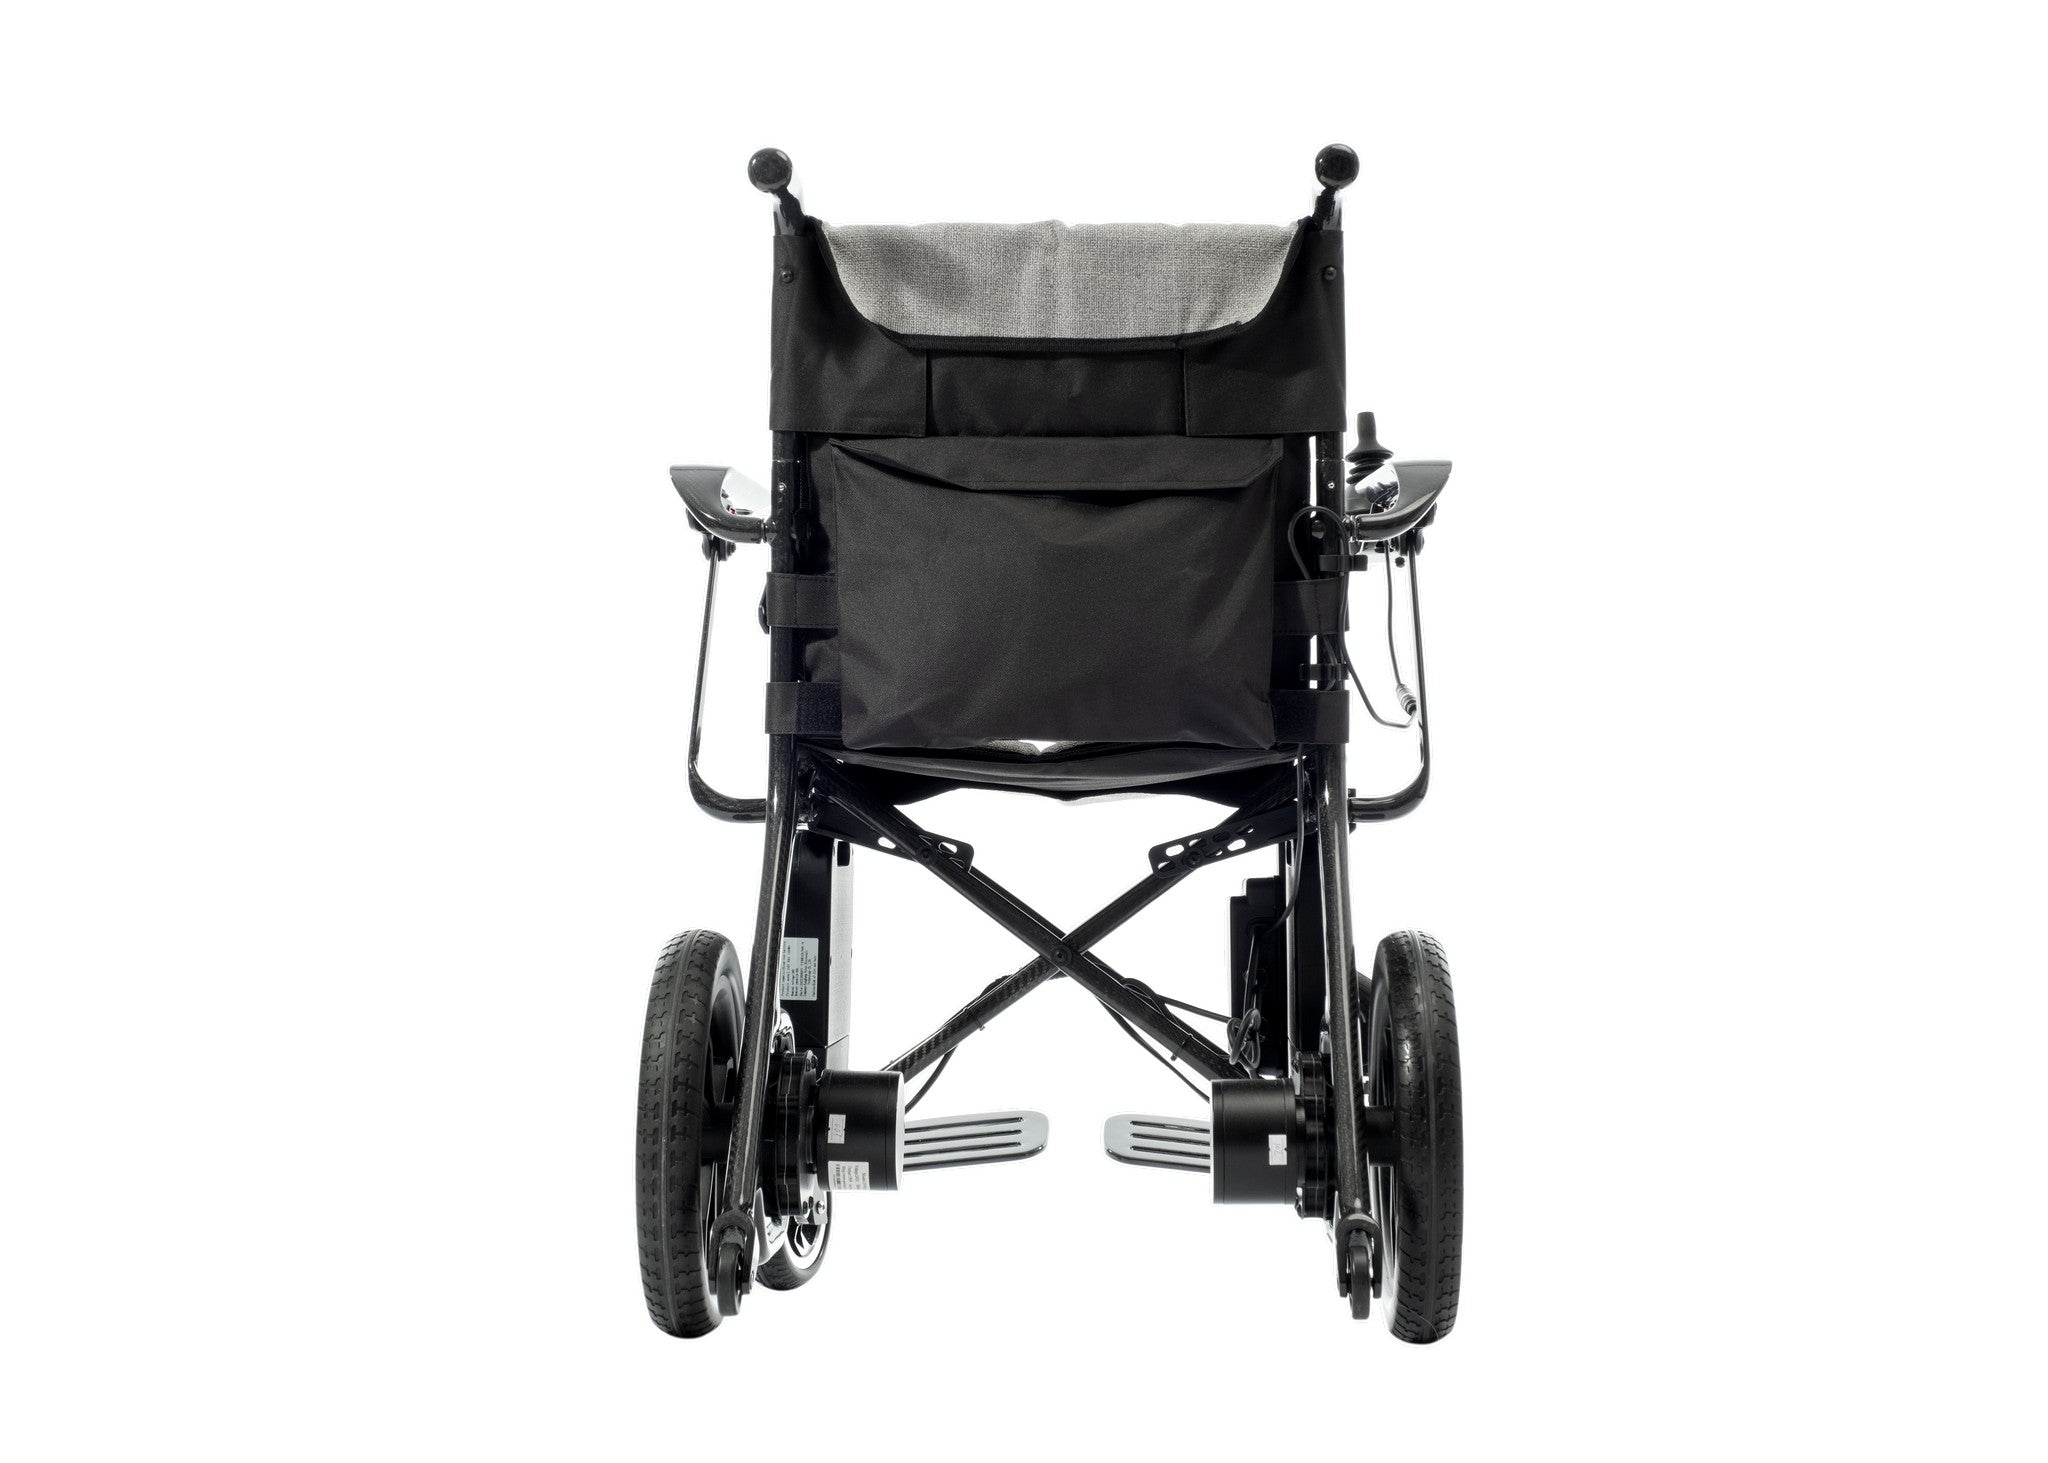 Ultra-light & long range electric wheelchair